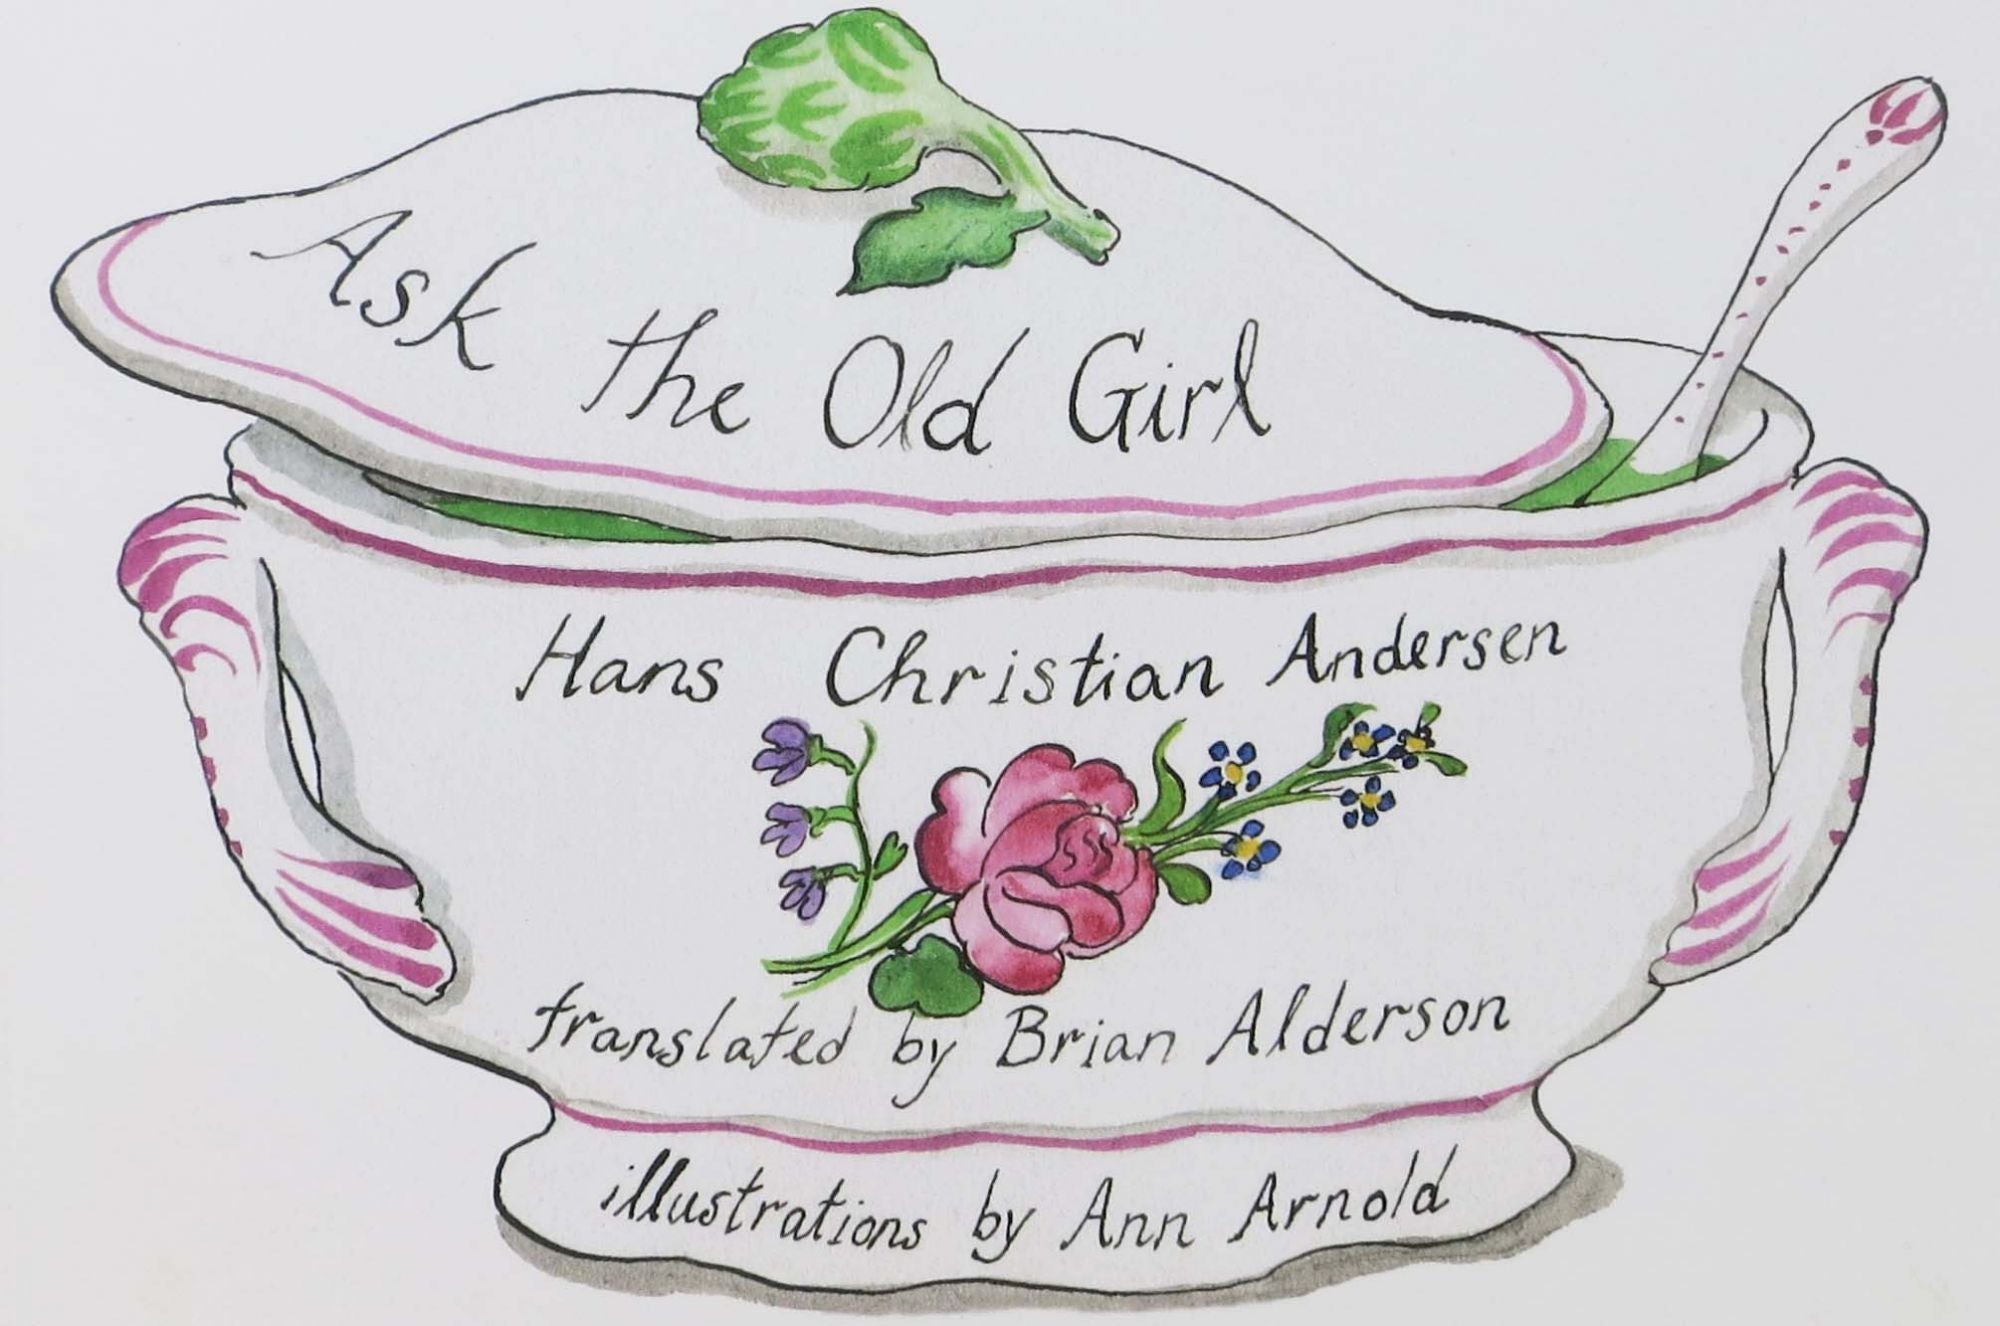 Andersen, Hans Christian. Alderson, Brian - Translator - ASK The OLD GIRL